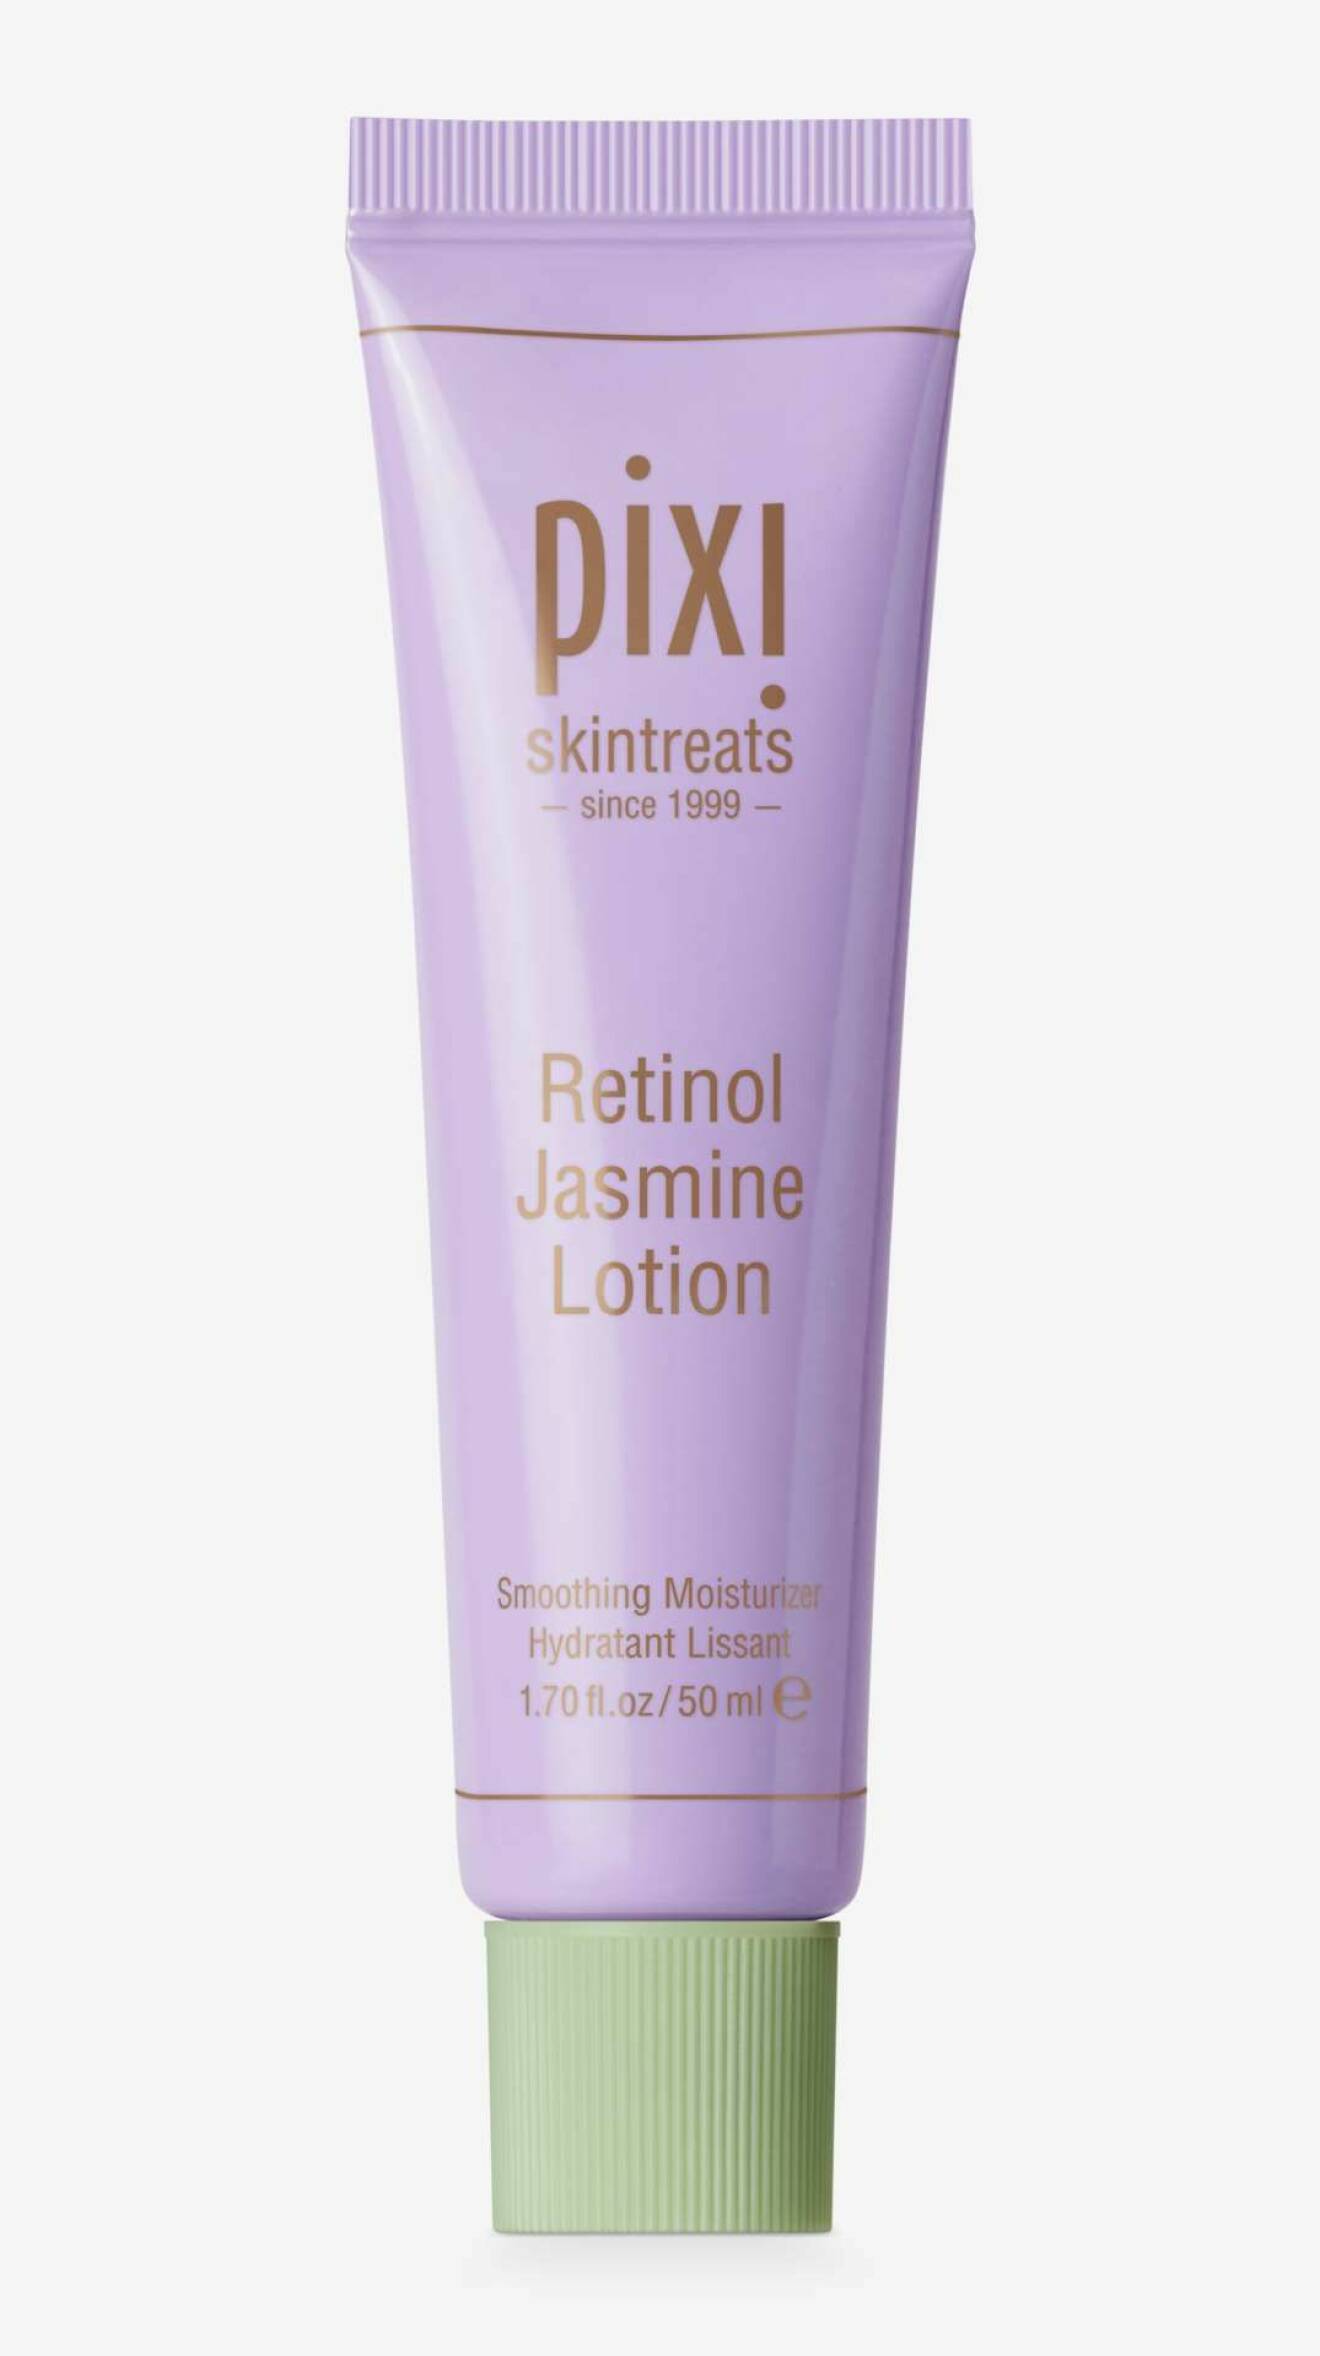 Retinol jasmine lotion från Pixies nya Retinol-serie.